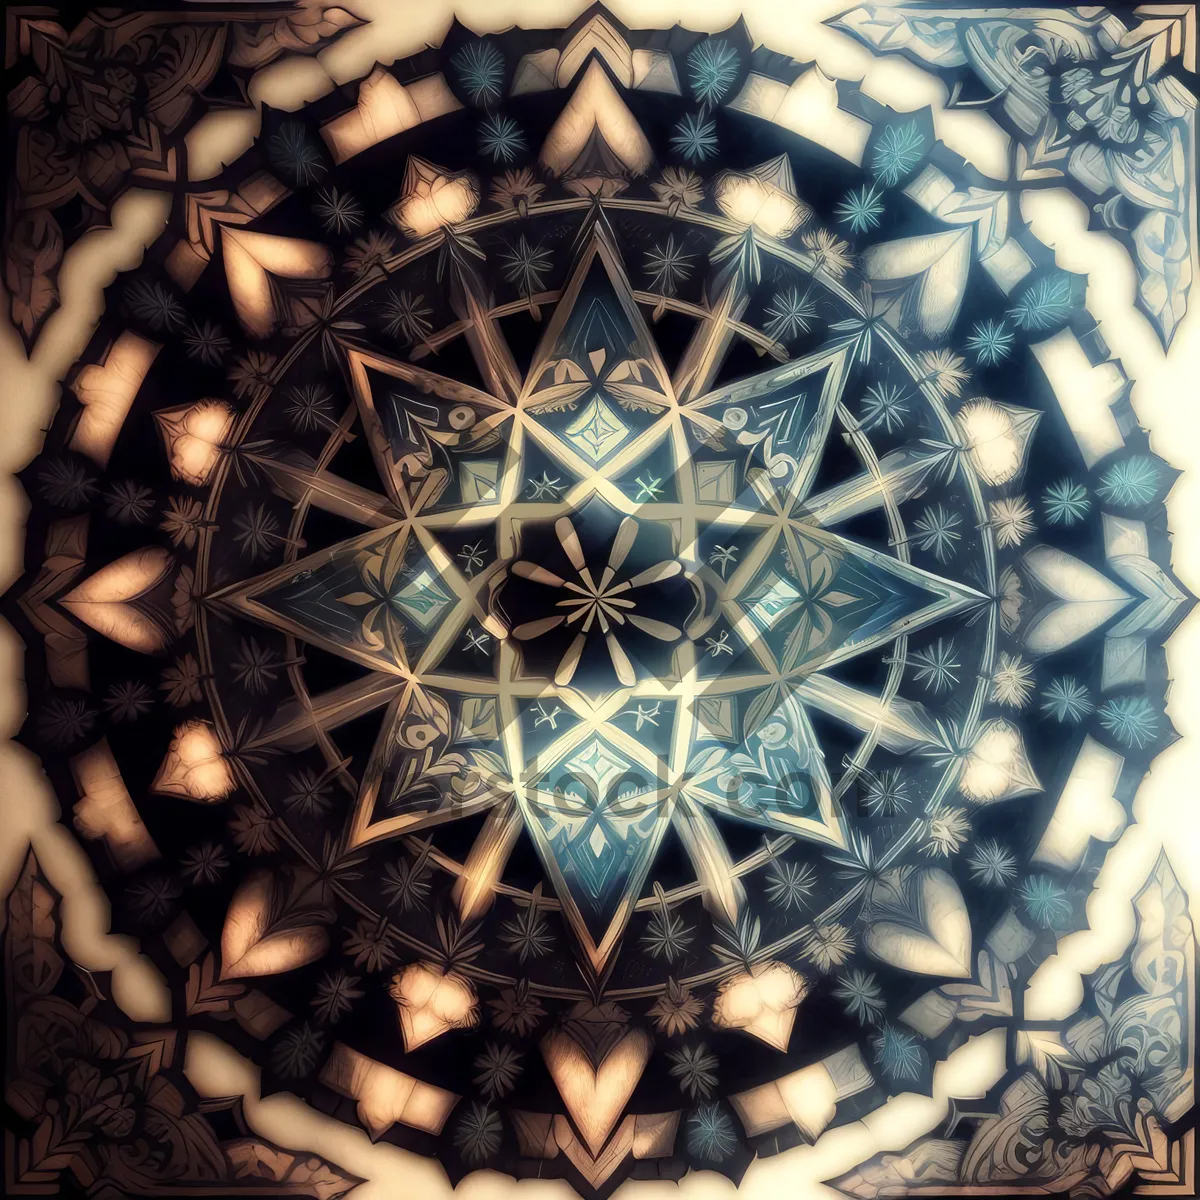 Picture of Arabesque-inspired Symmetrical Mosaic Wallpaper Design